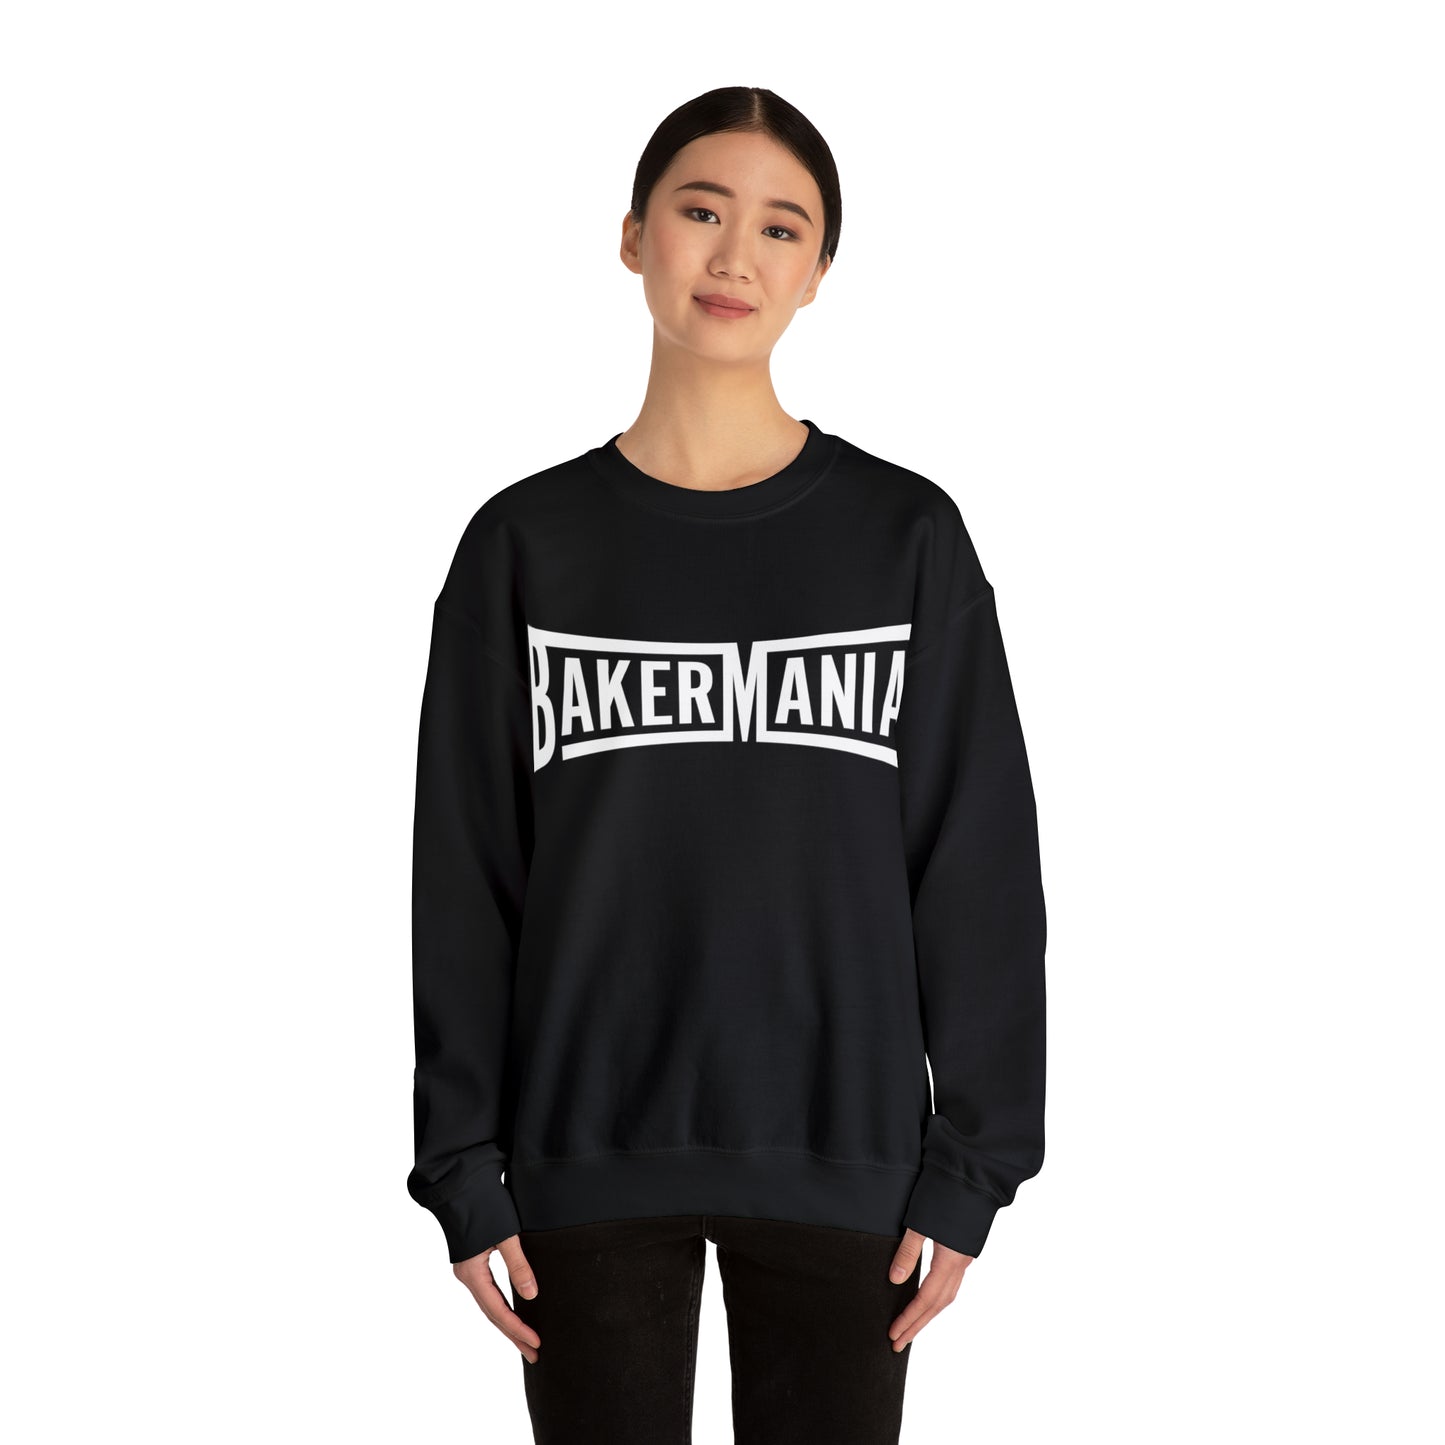 BakerMania Unisex Crewneck Sweatshirt